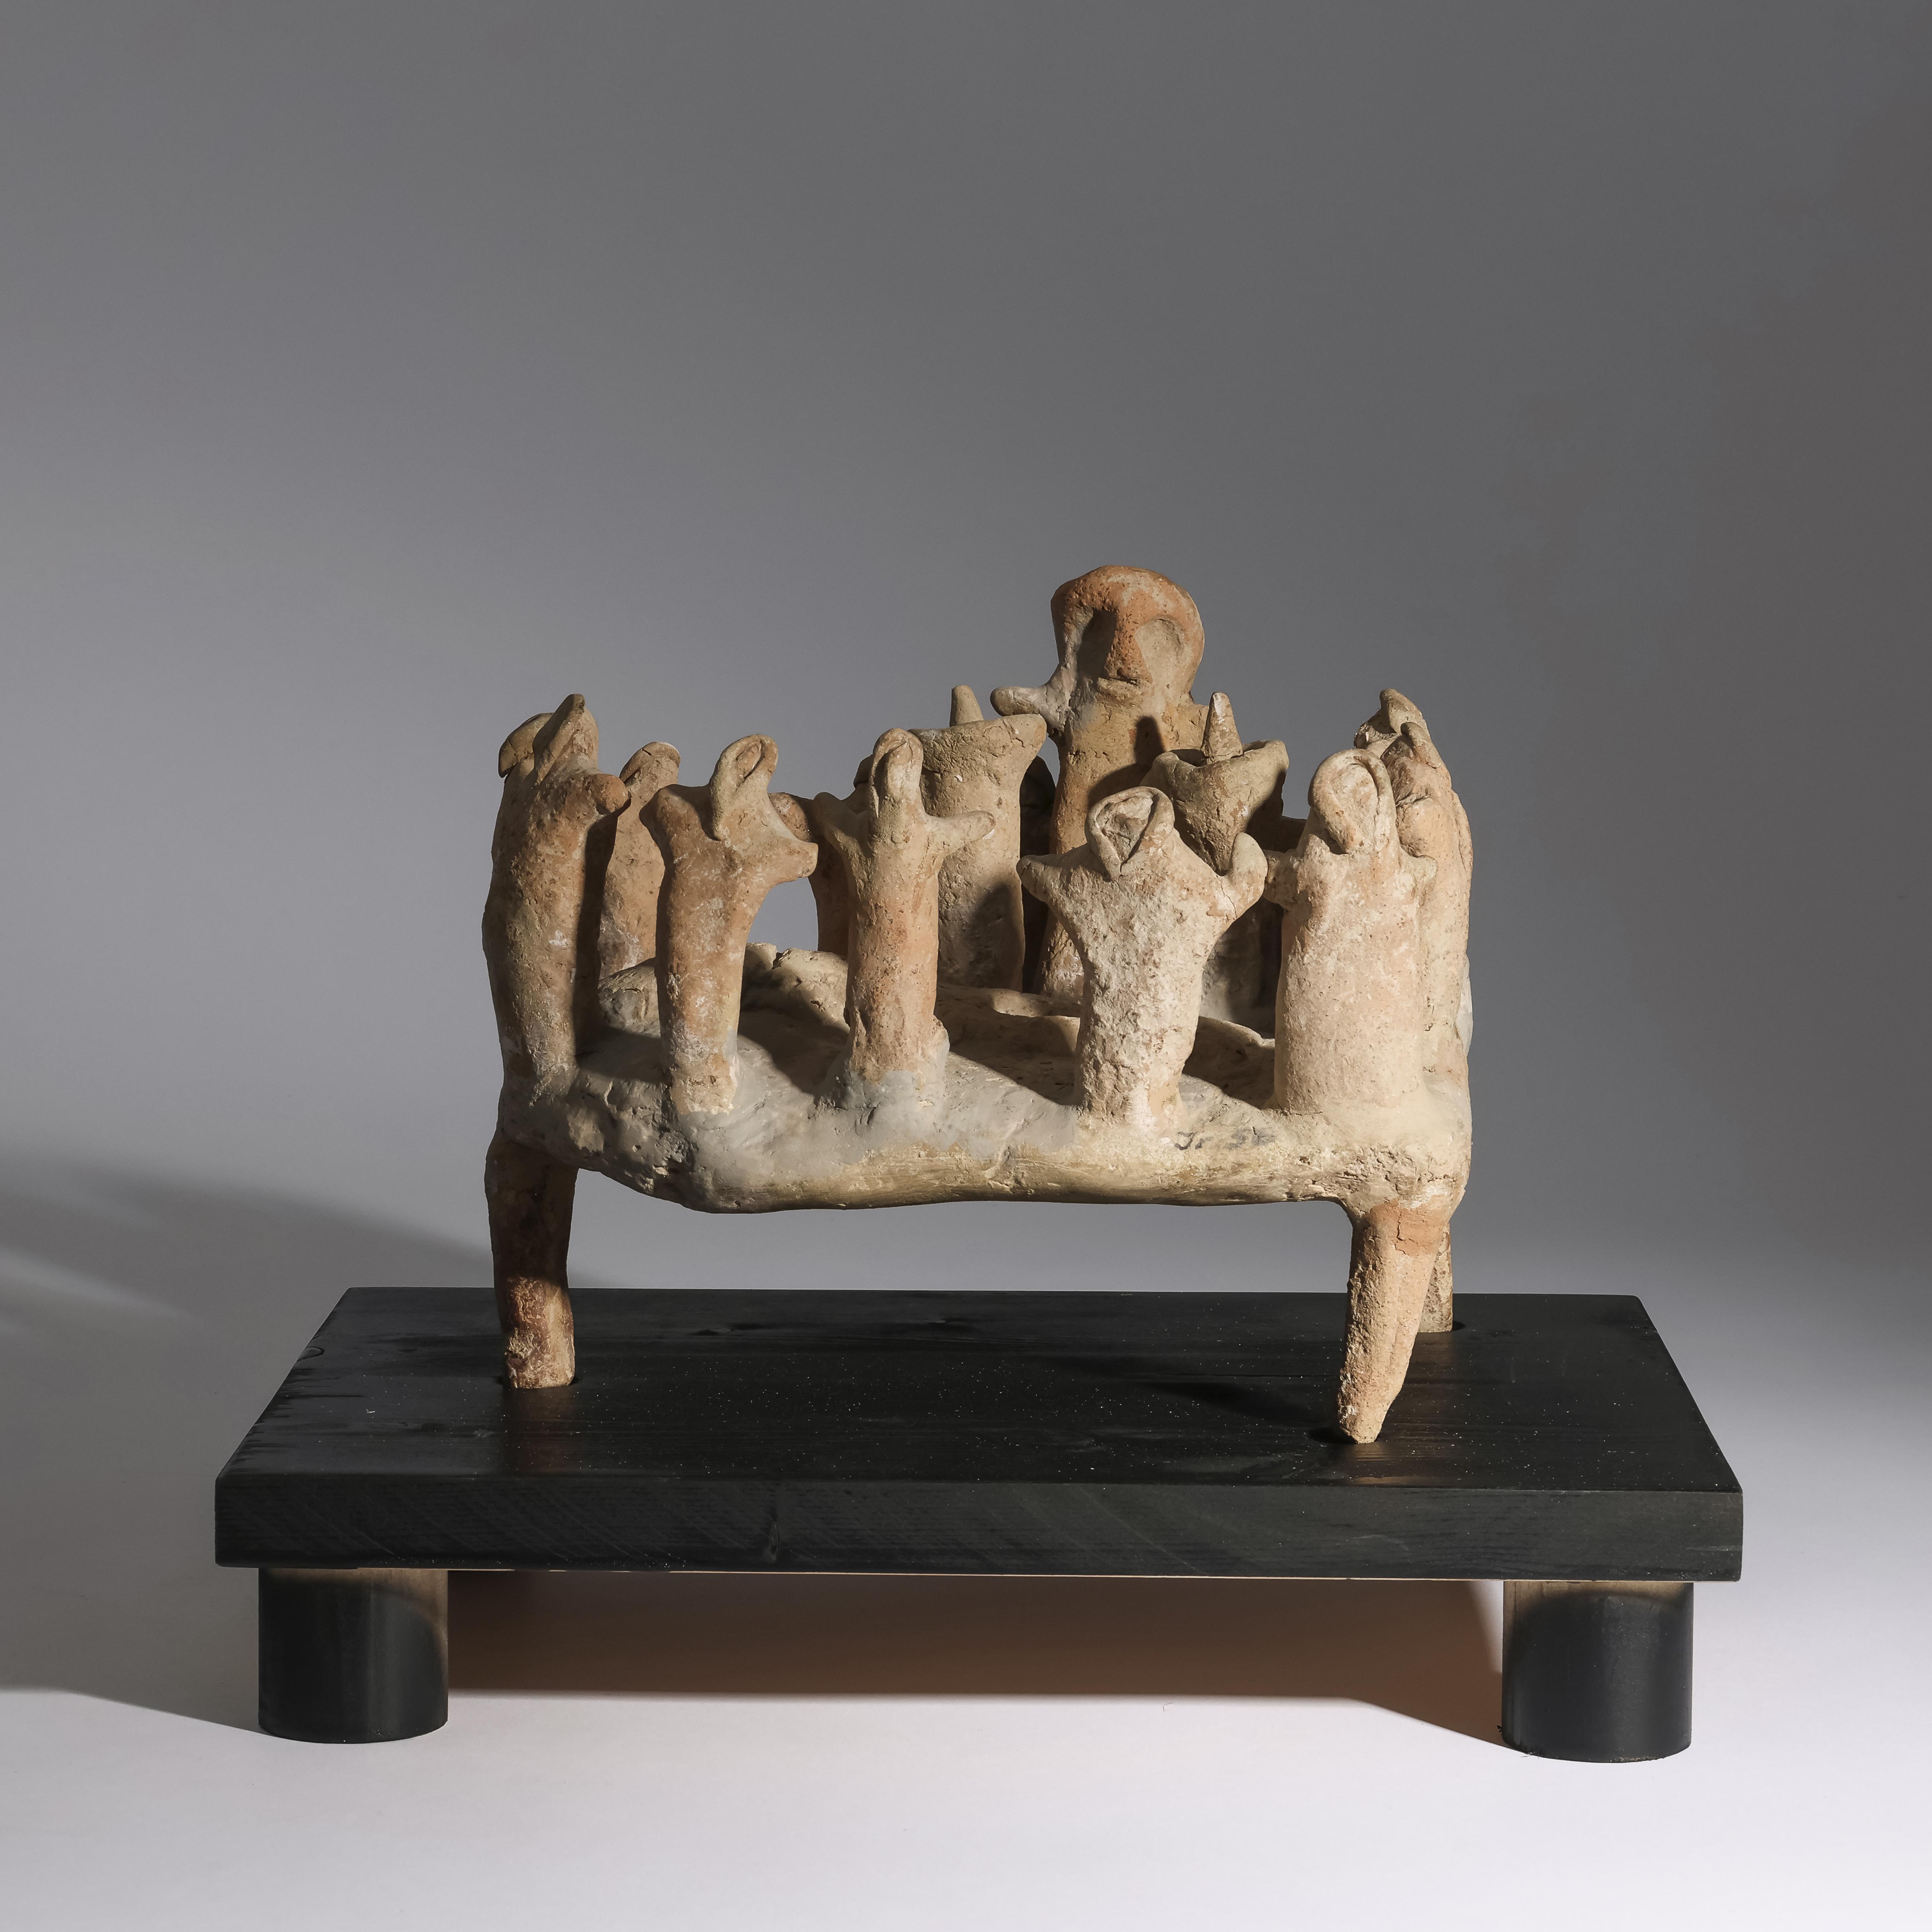 A Persian terracotta funeral votif platform, Kerman, 2nd Mill. BC, - Image 7 of 7